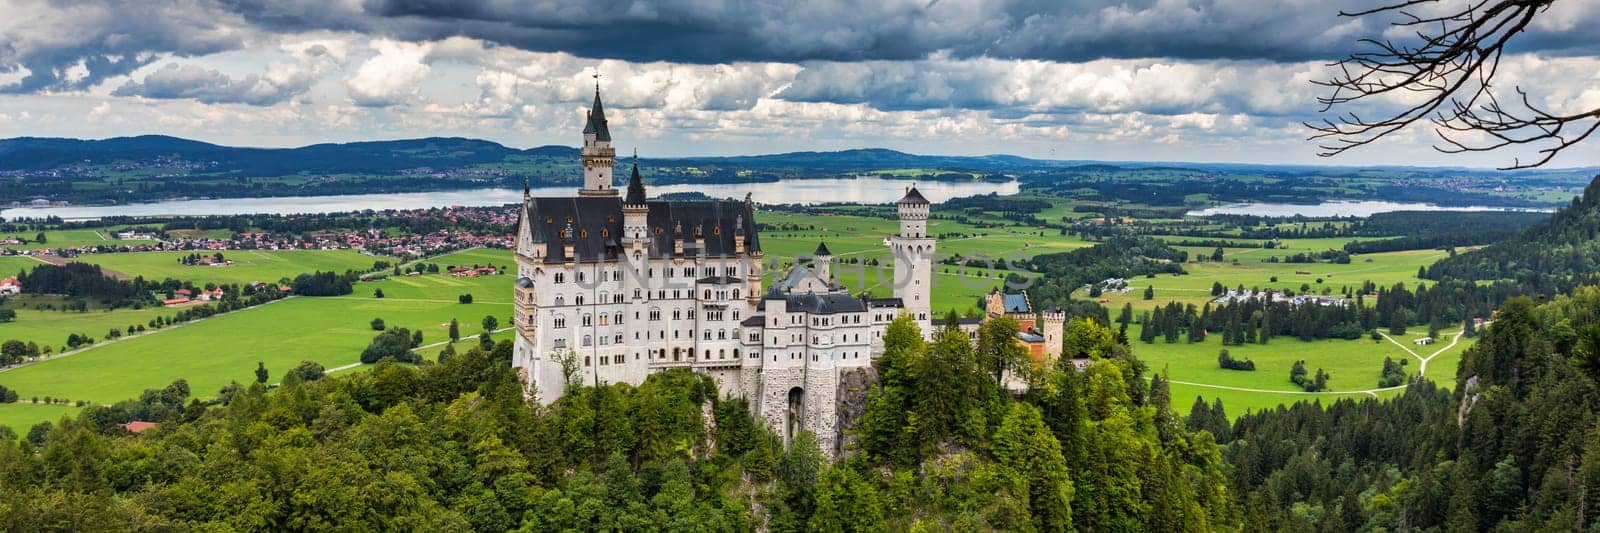 Famous Neuschwanstein Castle with scenic mountain landscape near Fussen, Bavaria, Germany. Neuschwanstein Castle in Hohenschwangau, Germany.  by DaLiu